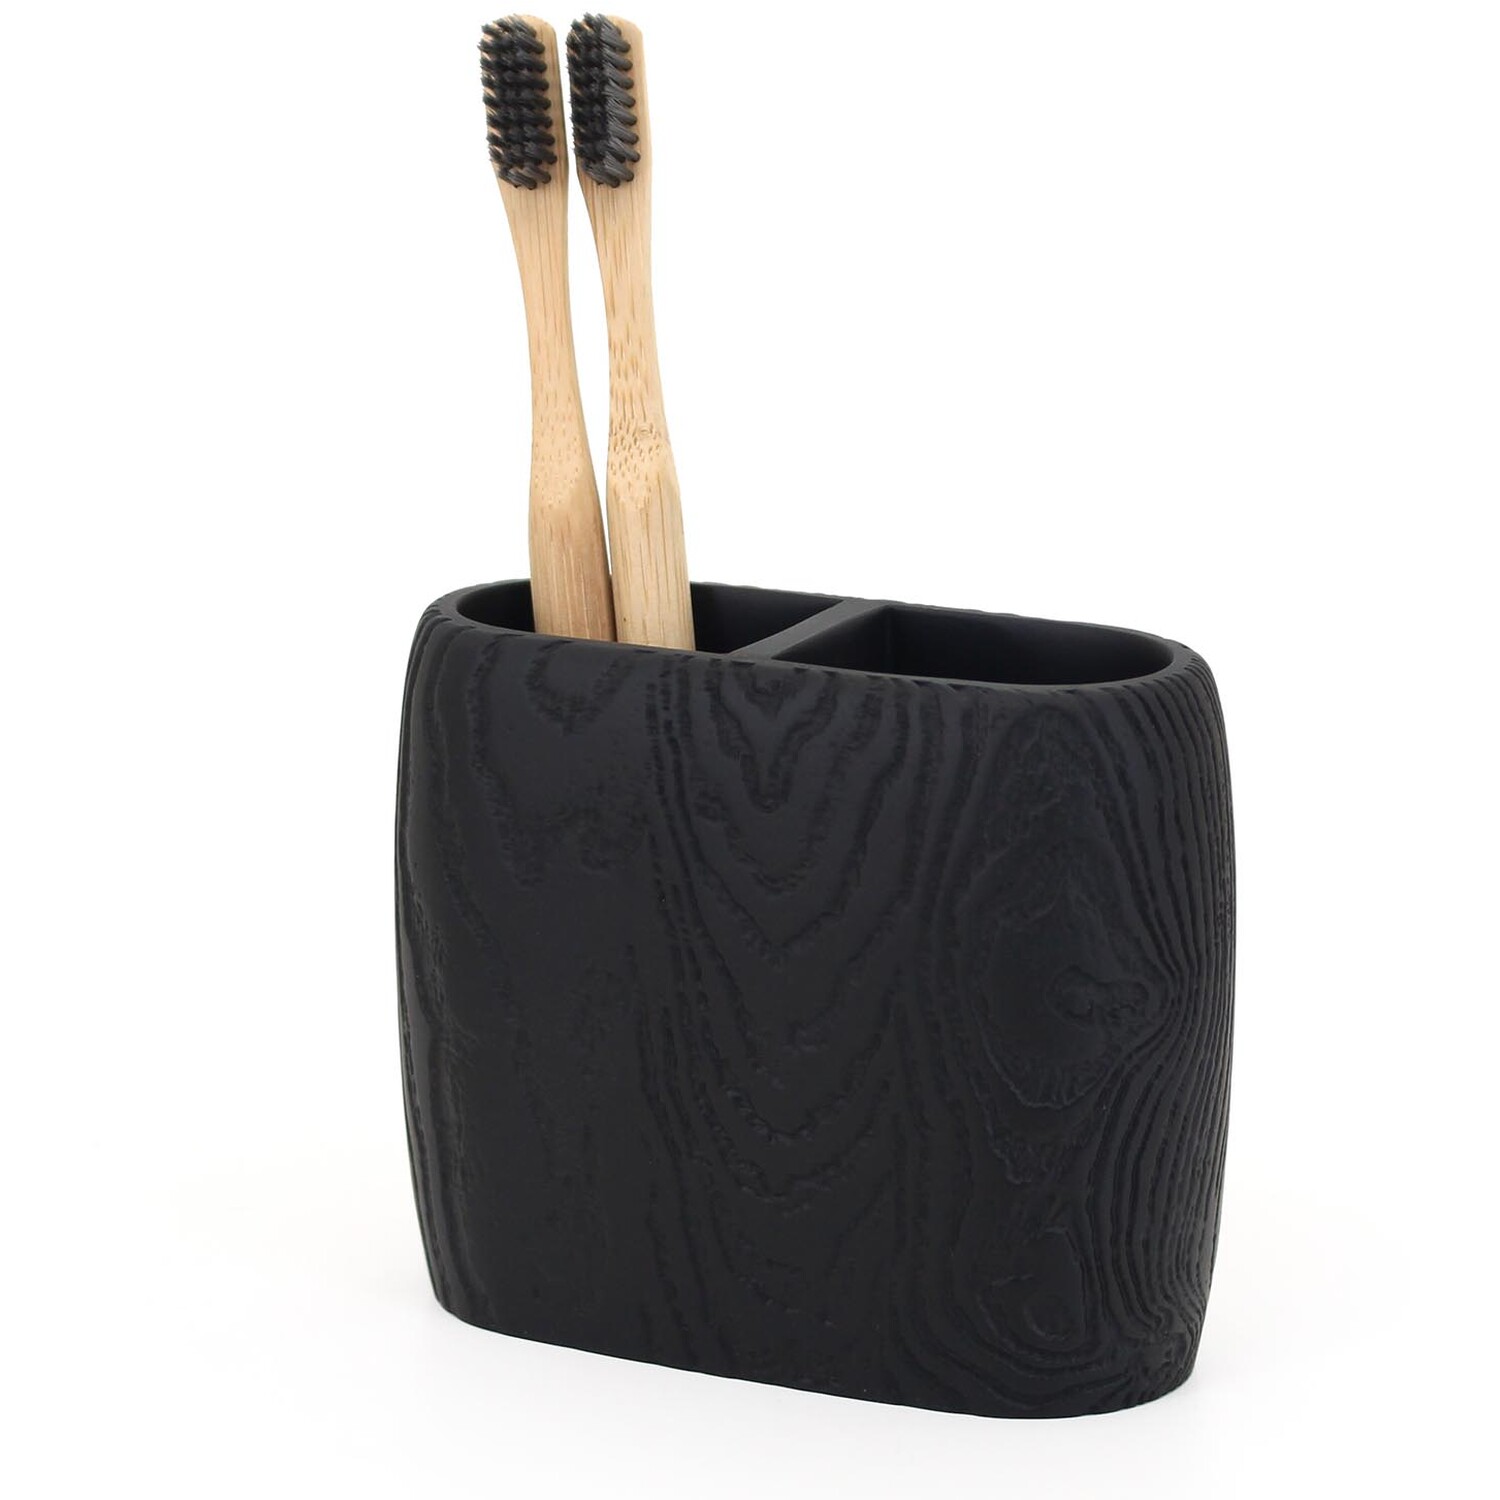 Wood Grain Toothbrush Holder - Black Image